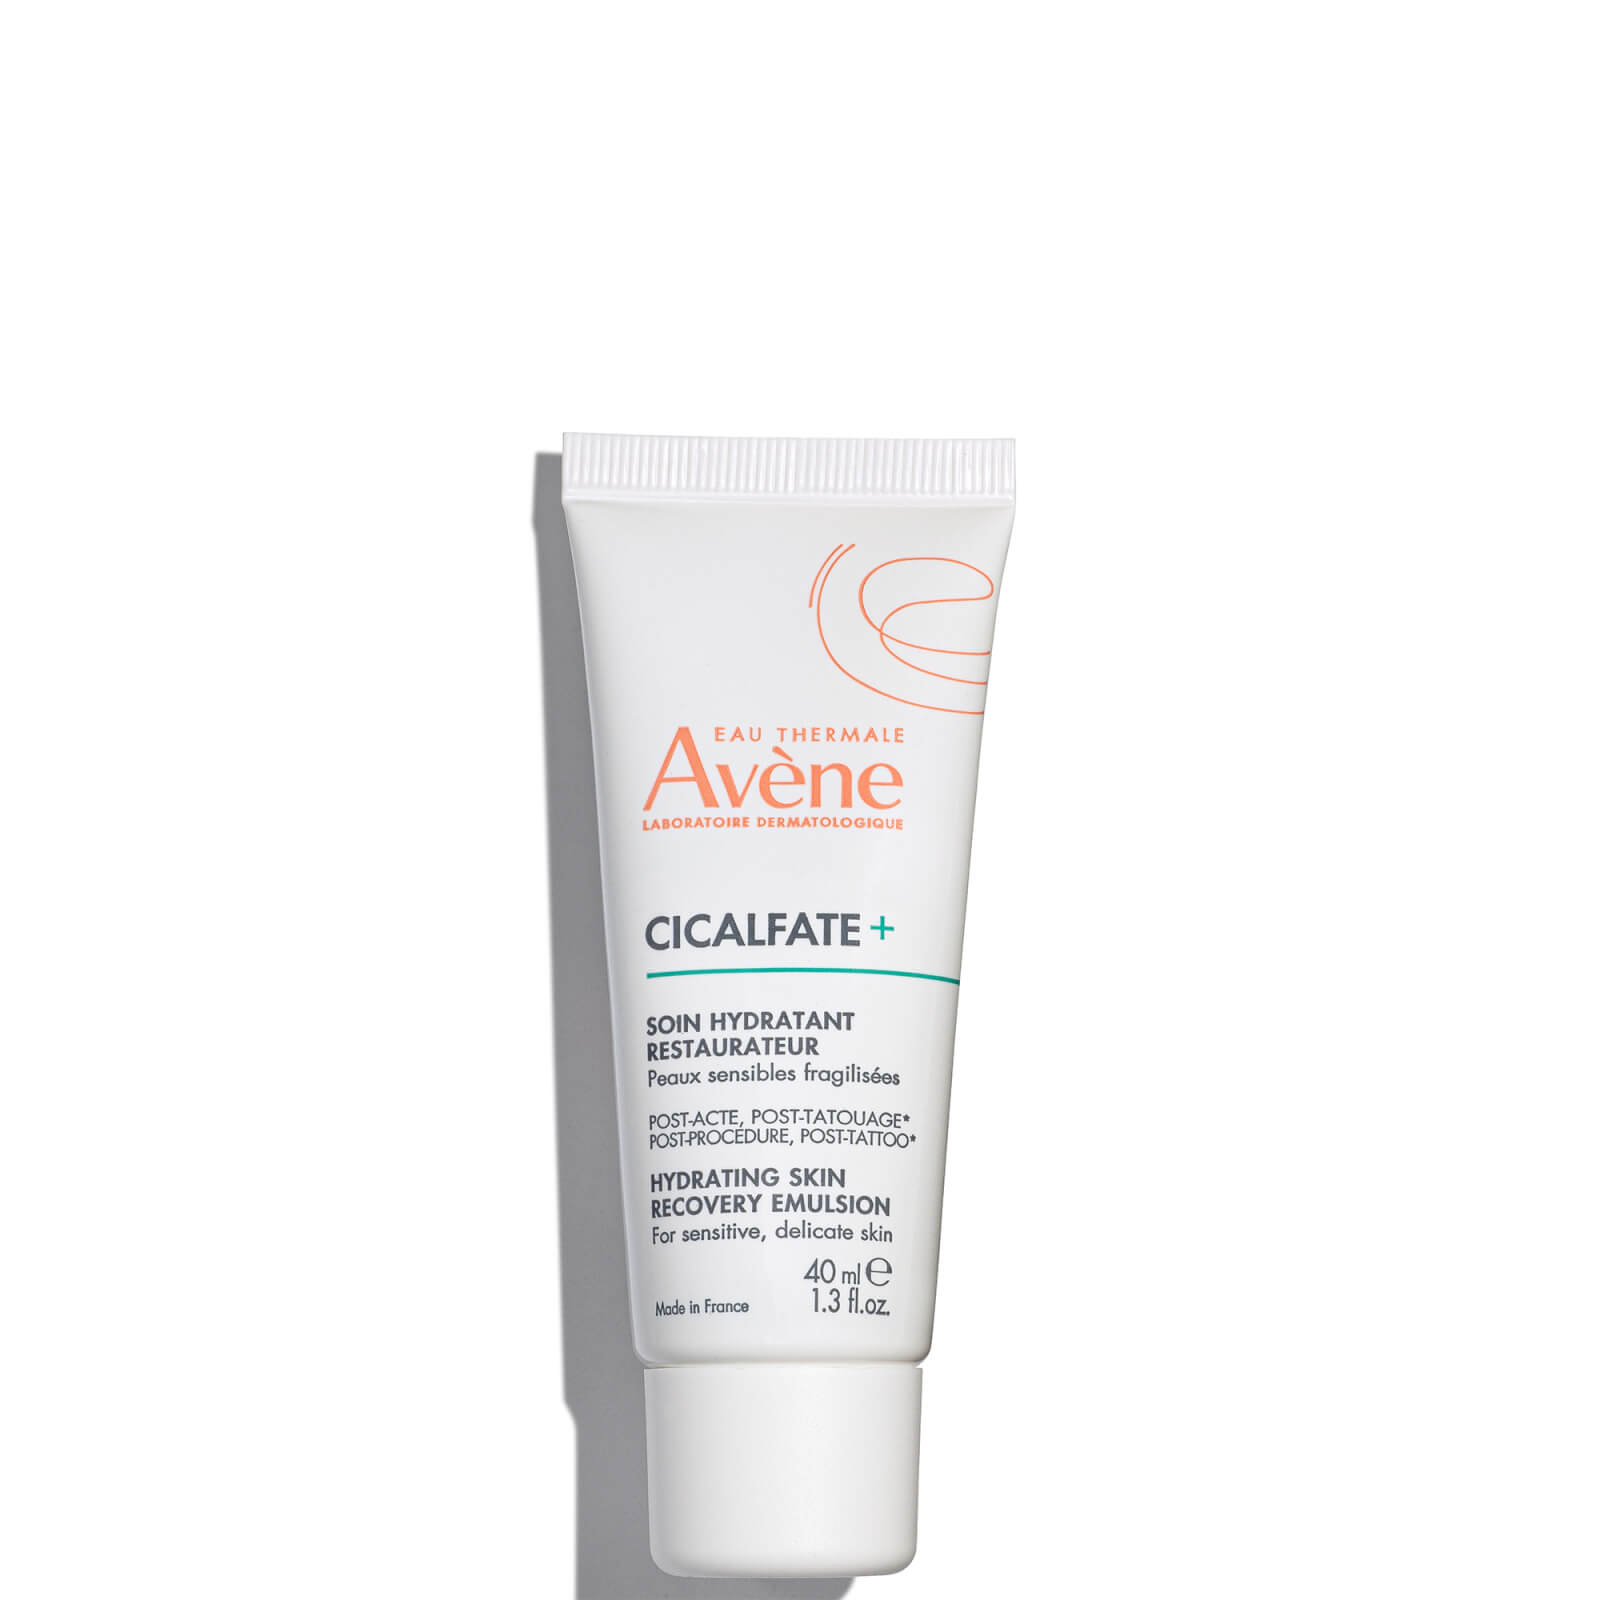 Avene Cicalfate+ Hydrating Skin Recovery Emulsion (1.3 Oz.)